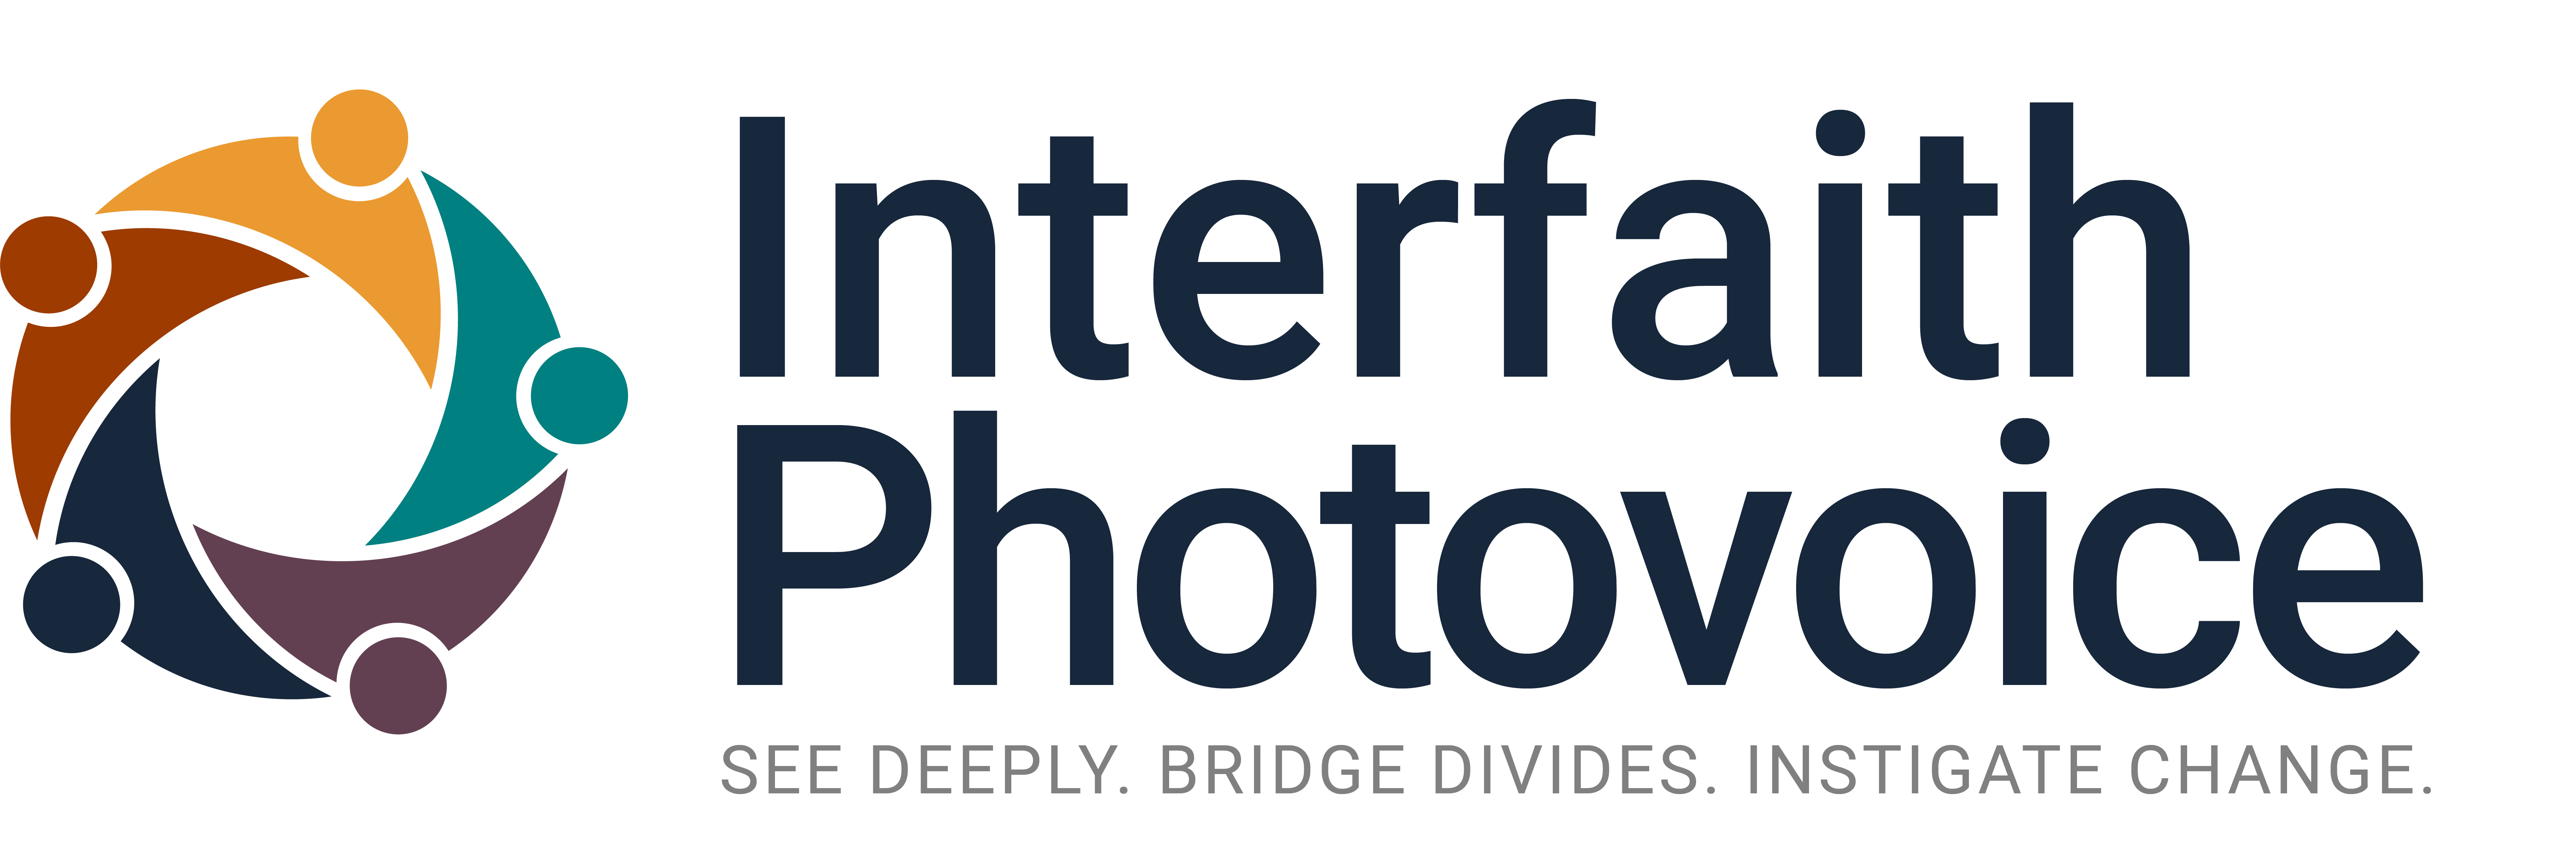 Interfaith Photovoice logo